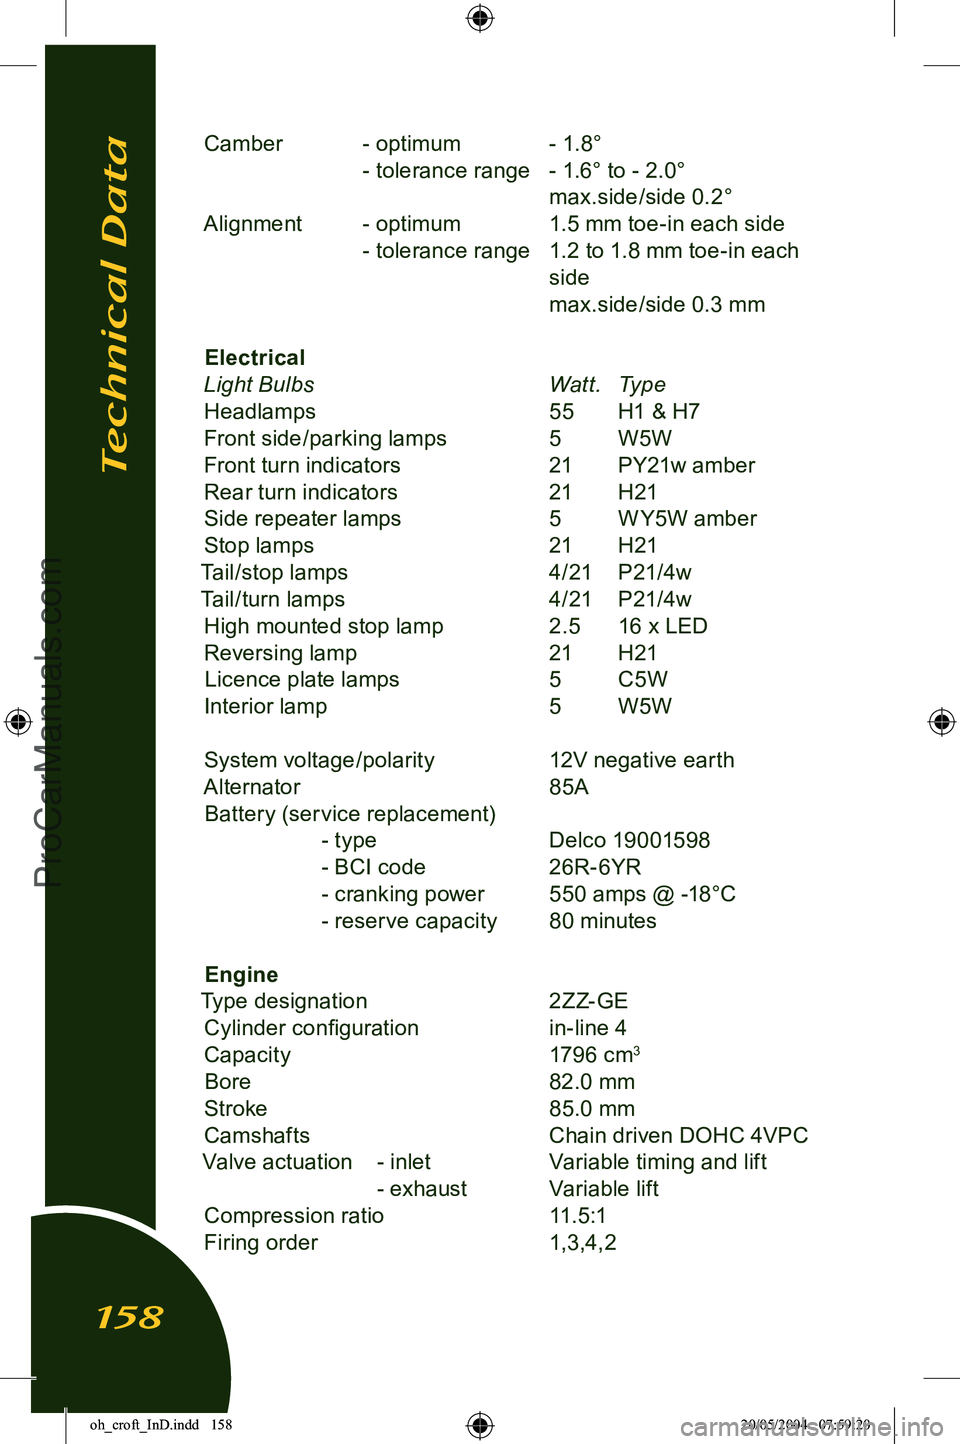 LOTUS ELISE 2005  Owners Manual 
Camber  - optimum  - 1.8°
  - tolerance range  - 1.6° to - 2.0°
    max.side/side 0.2°
Alignment  - optimum  1.5 mm toe-in each side    - tolerance range  1.2 to 1.8 mm toe-in each  
    side
   